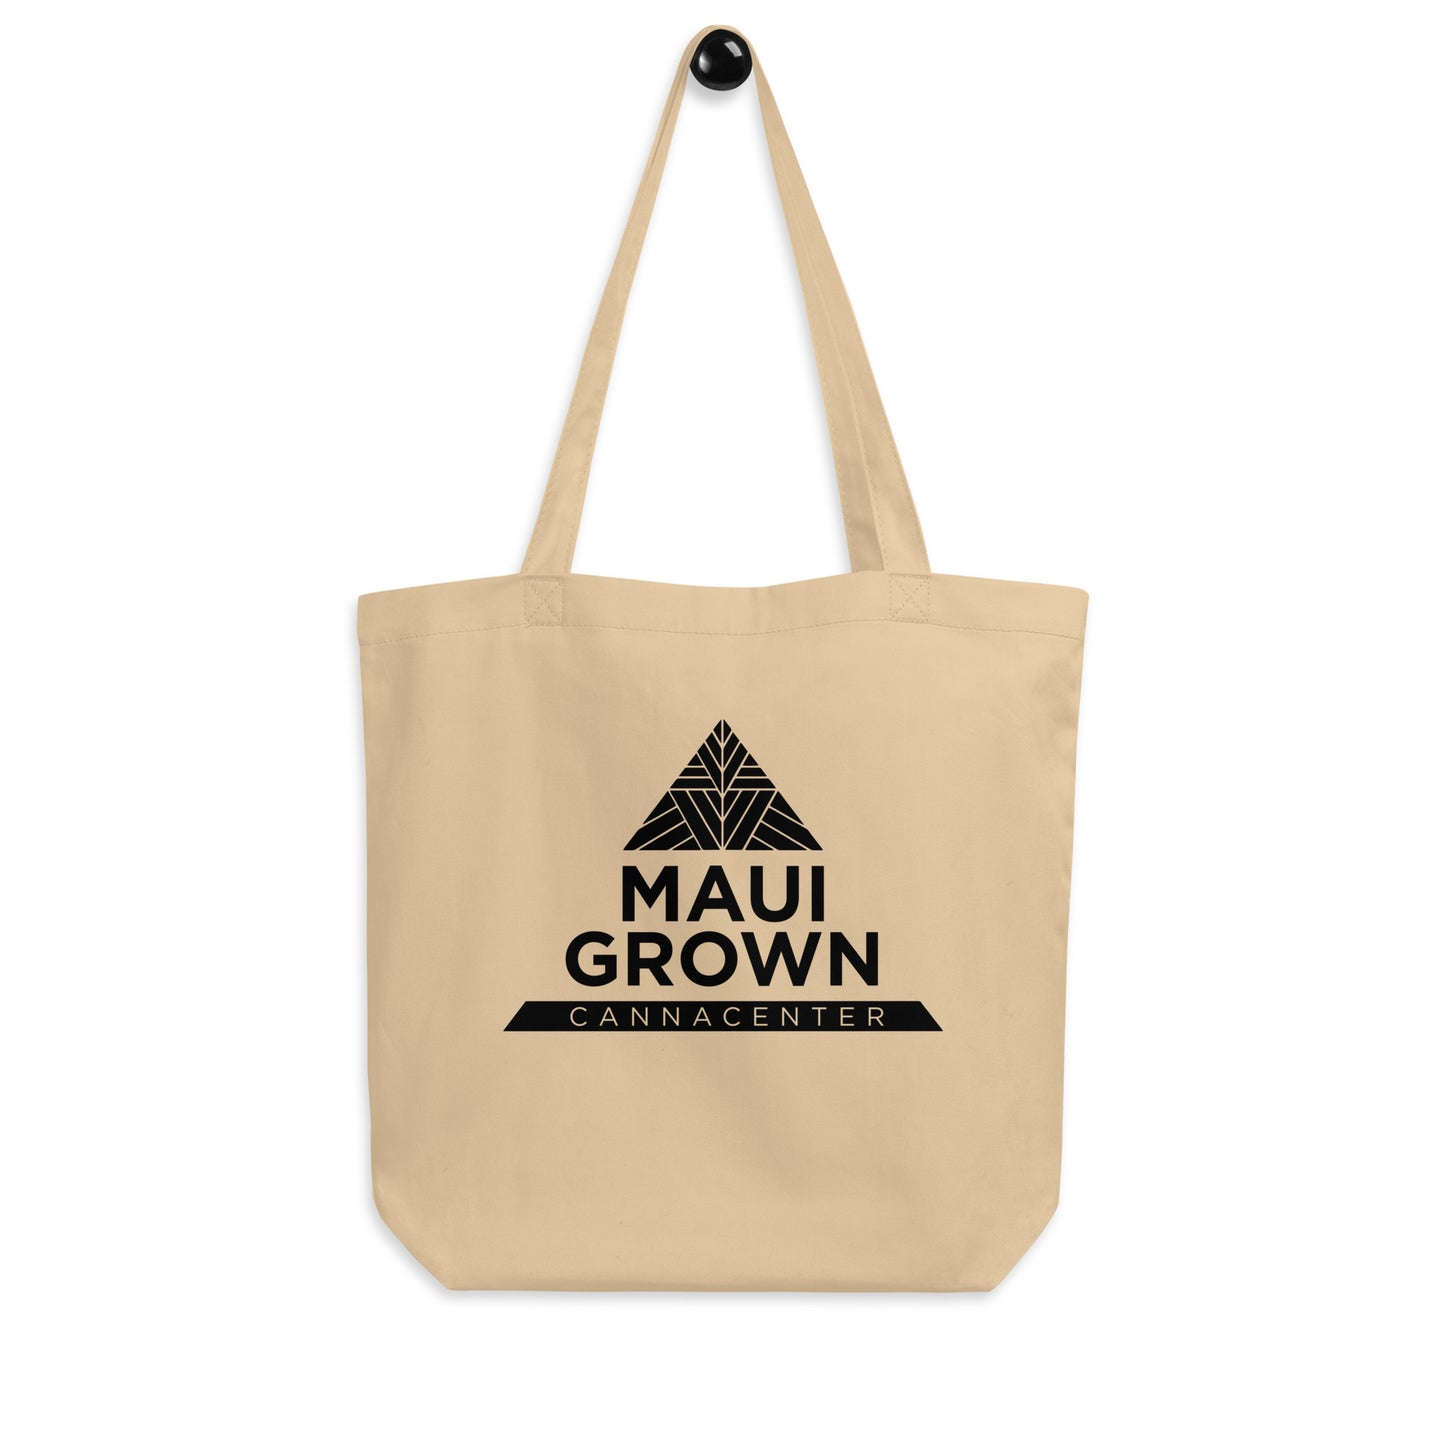 Maui Grown Cannacenter Eco Tote Bag - Oyster